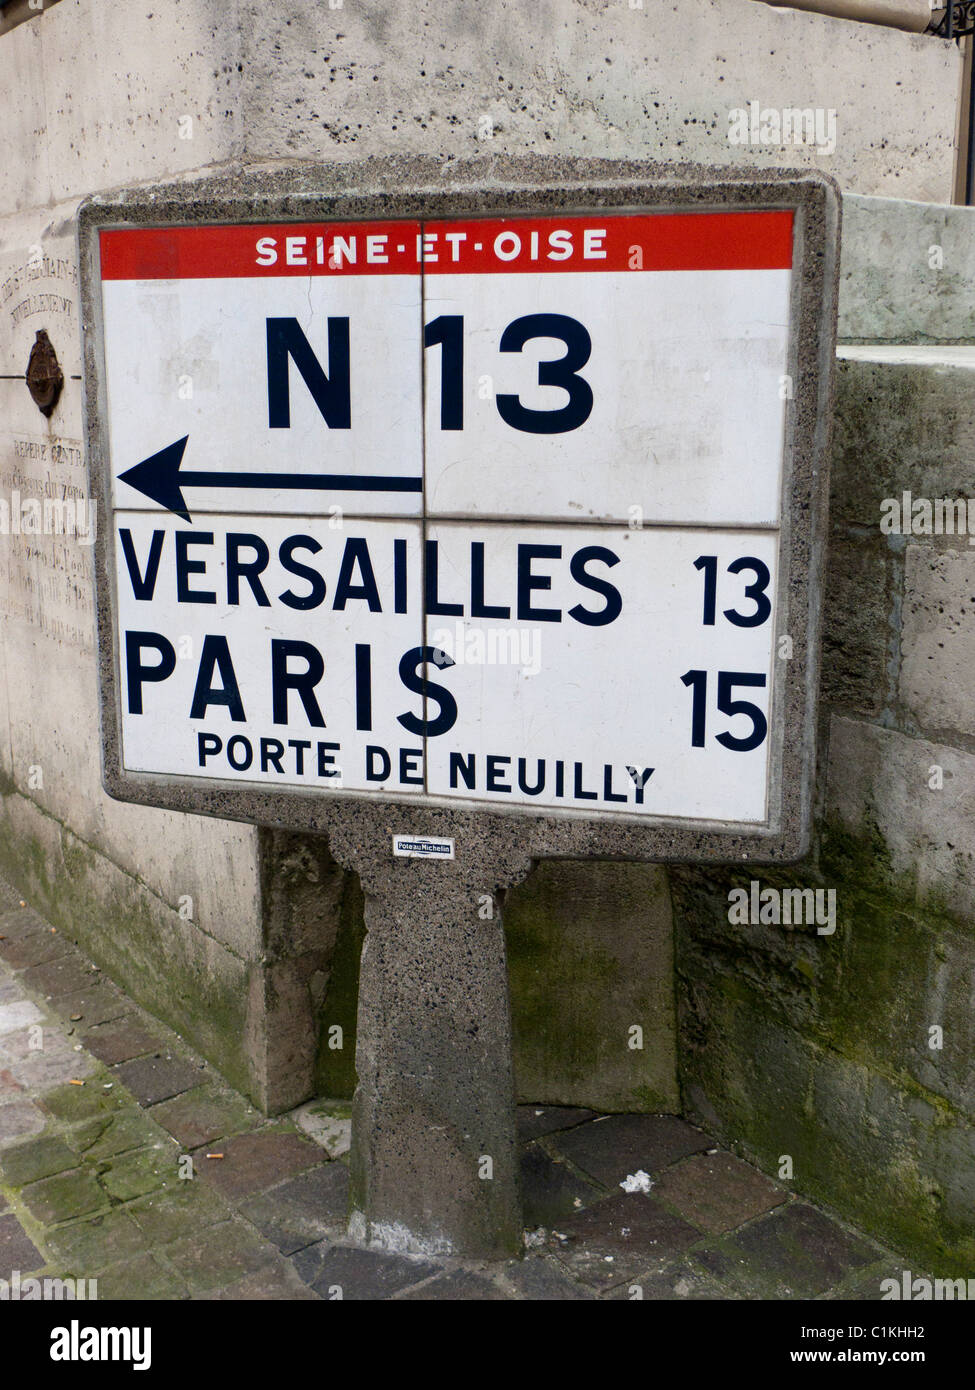 Old road sign at Saint-Germain-en-Laye France Stock Photo